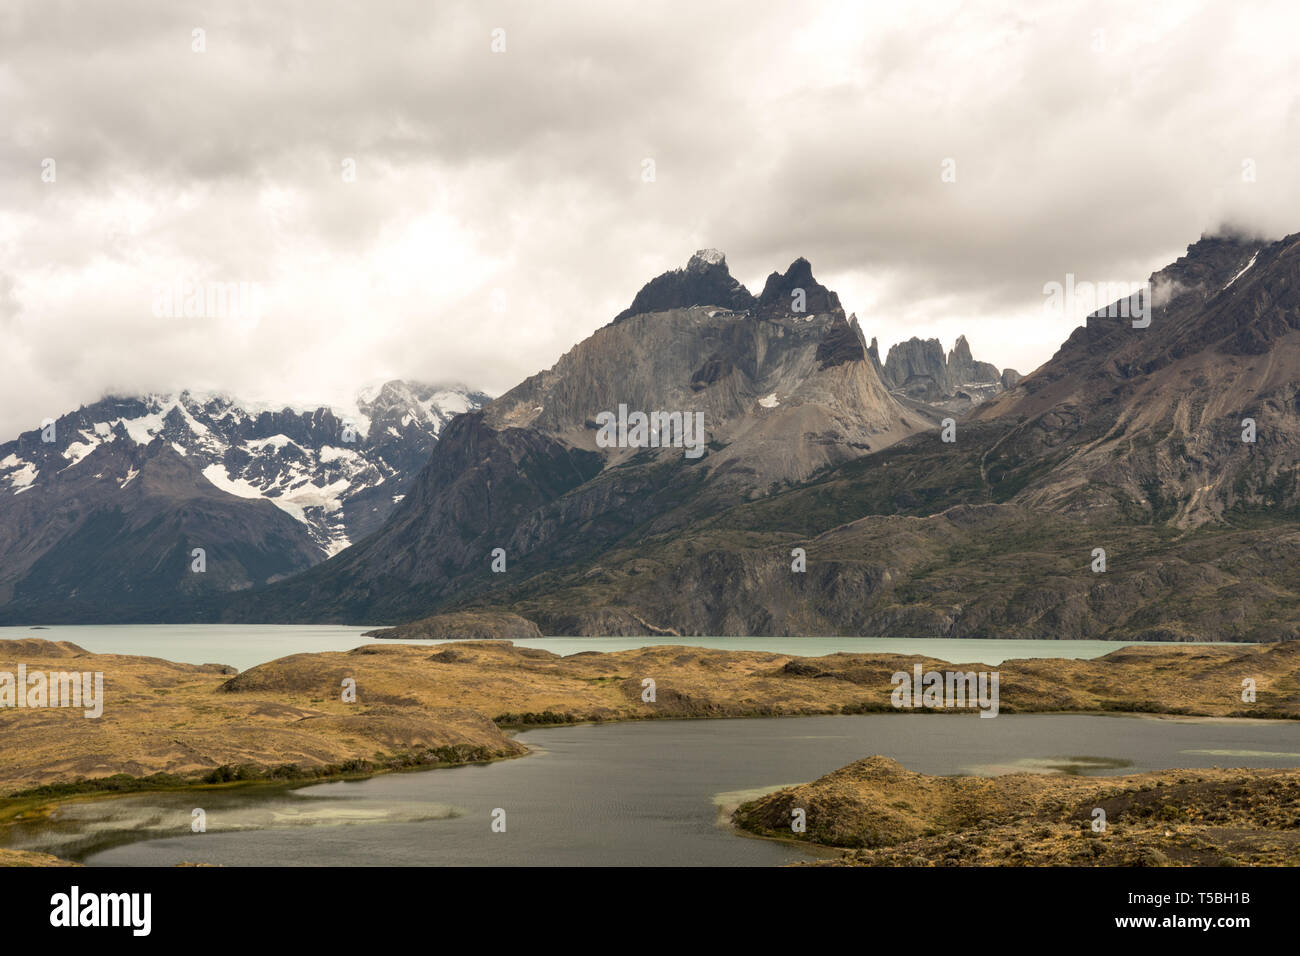 El espectacular paisaje del Parque Nacional Torres del Paine, Patagonia Austral, Chile Foto de stock